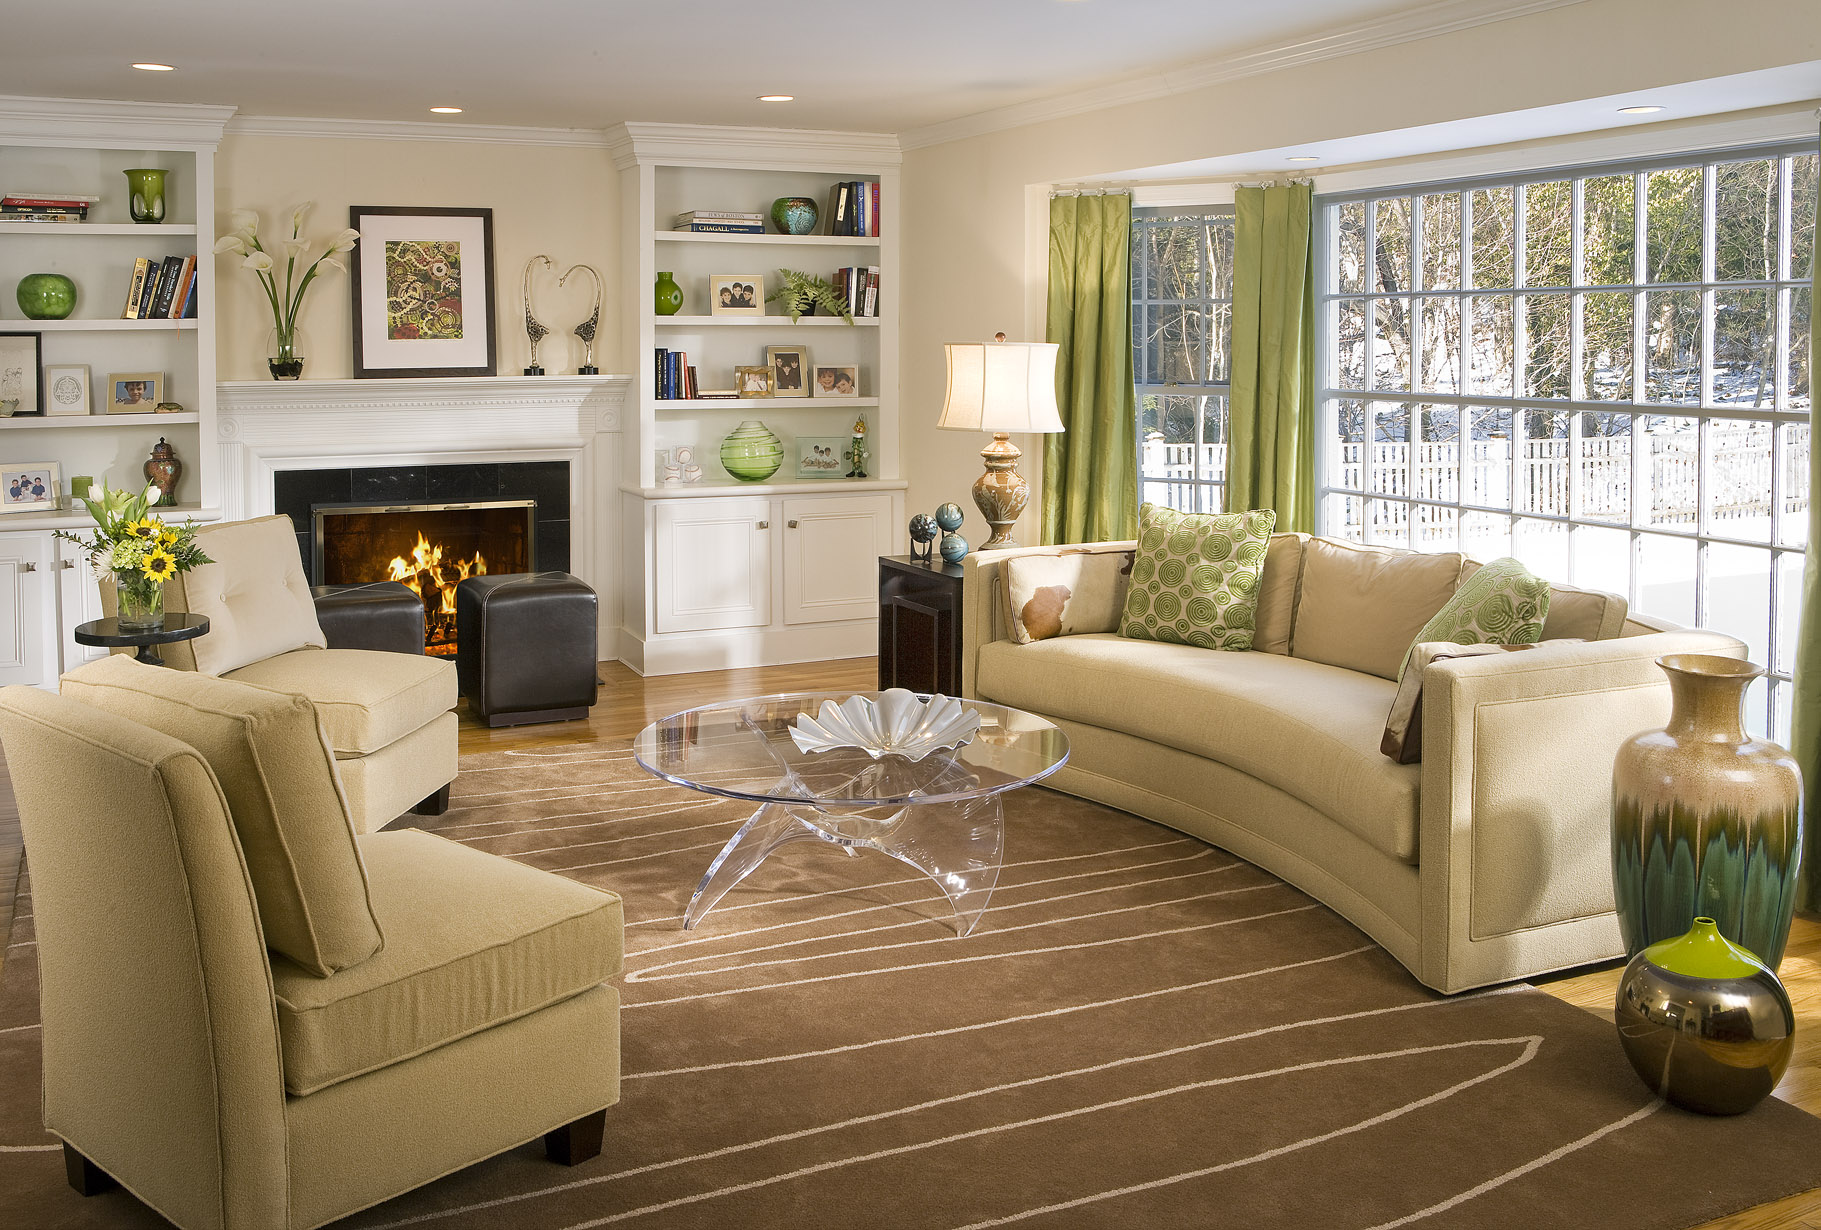 Home Interior Decorating Tips Modern Interior Design: 10 Best Tips For ...